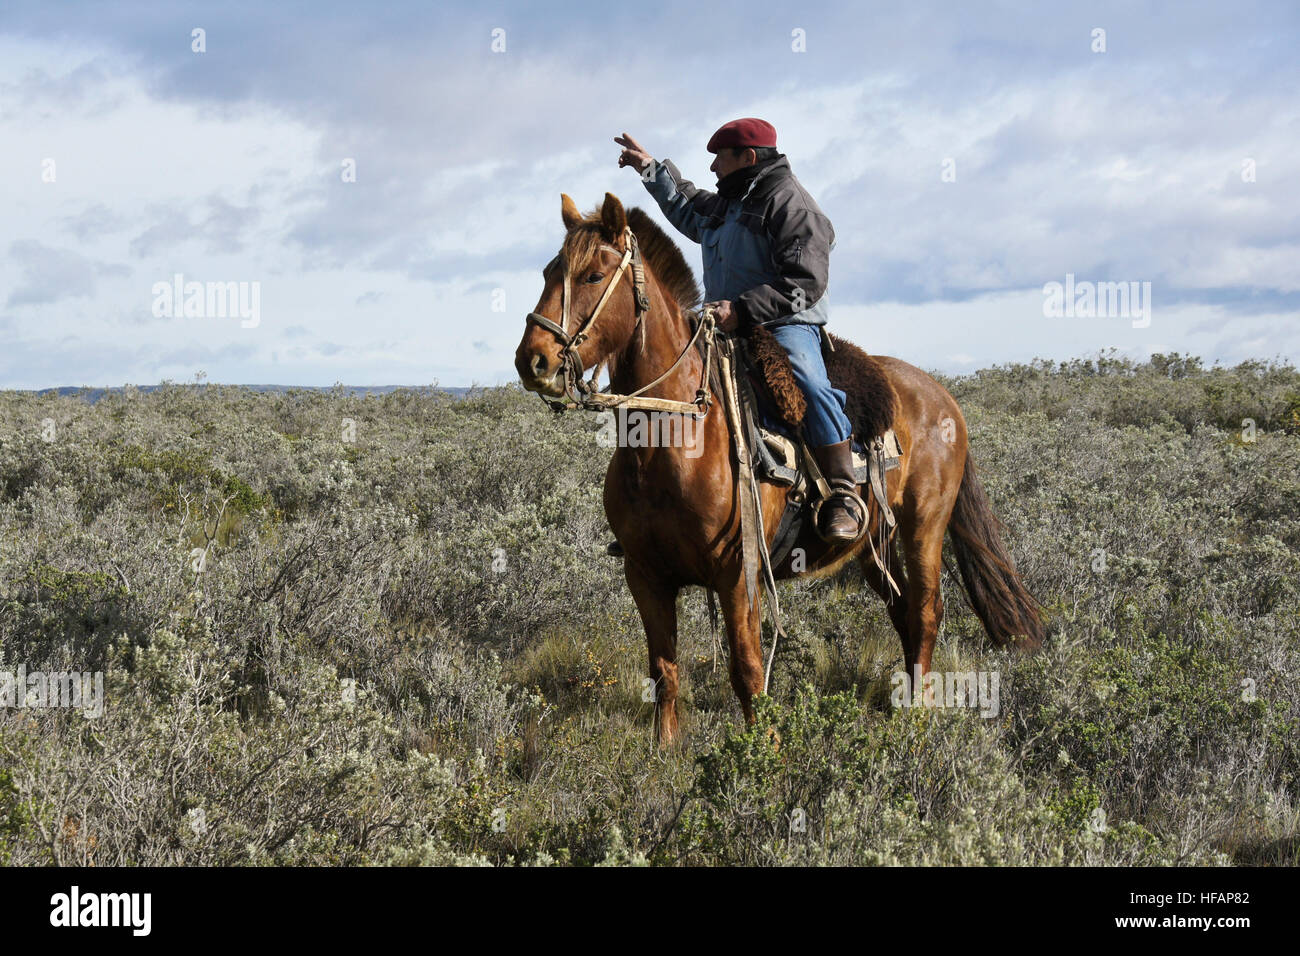 Ovejero (gaucho, shepherd, cowboy) on horse, Patagonia, Chile Stock Photo